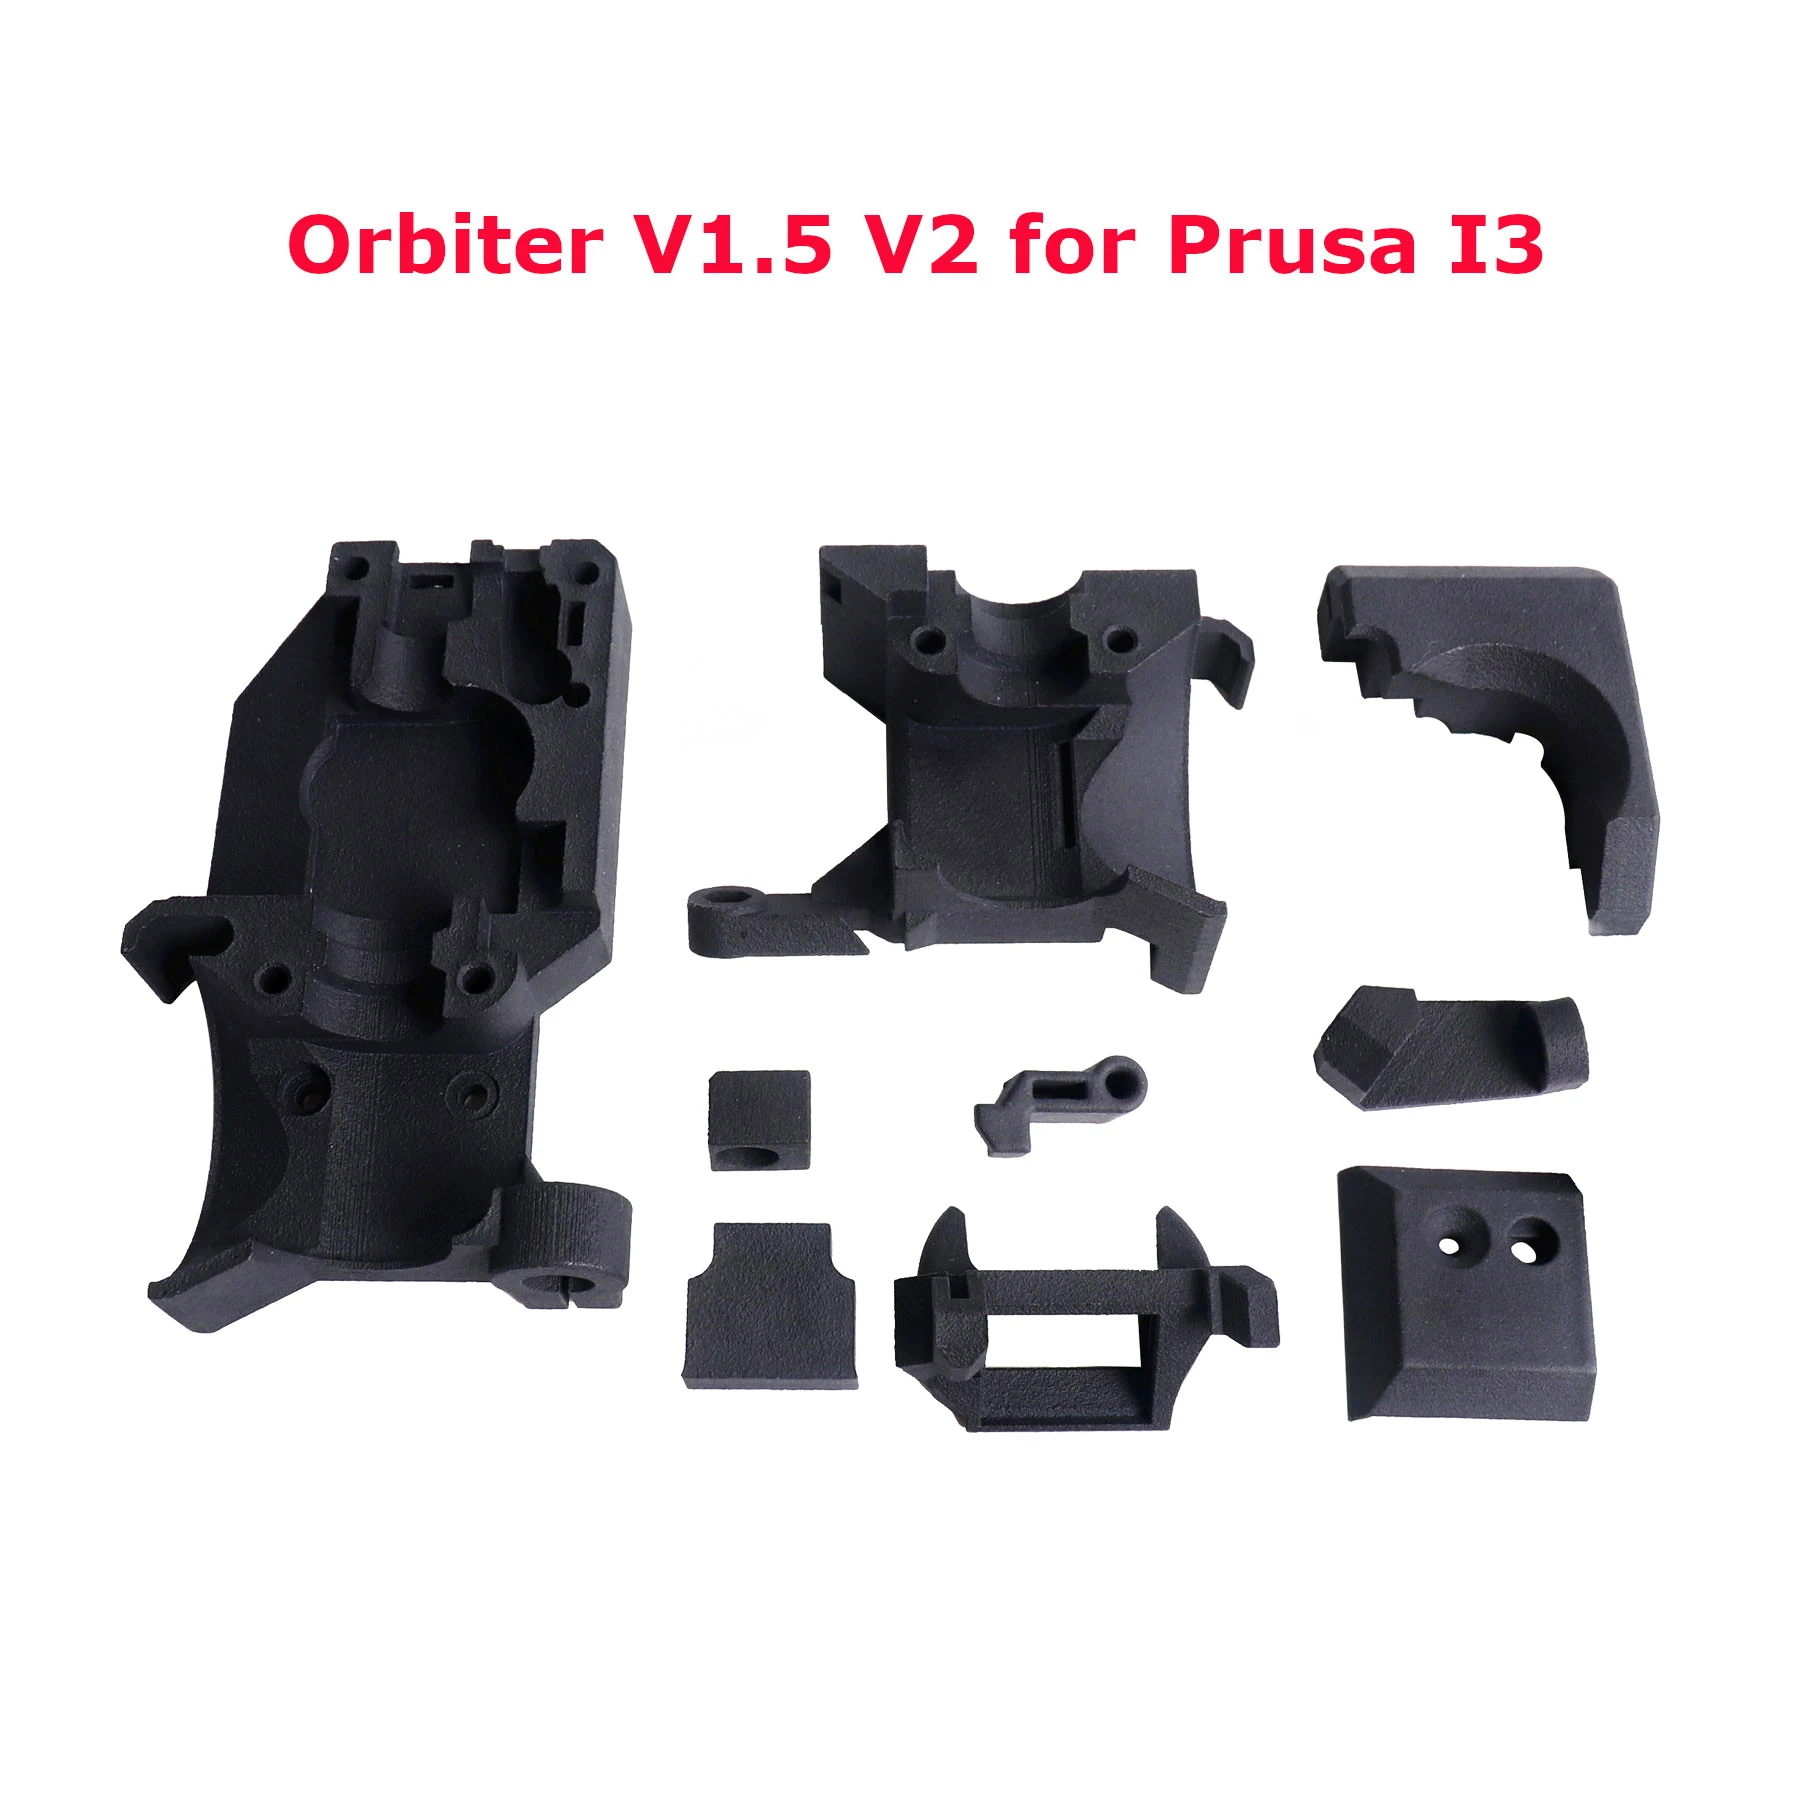 

Blurolls Z'Orbiter Orbiter 1.5 V2 2.0 Extruder SLS Printed Parts for Prusa I3 MK3S MK3S+ Bear 3d Printers